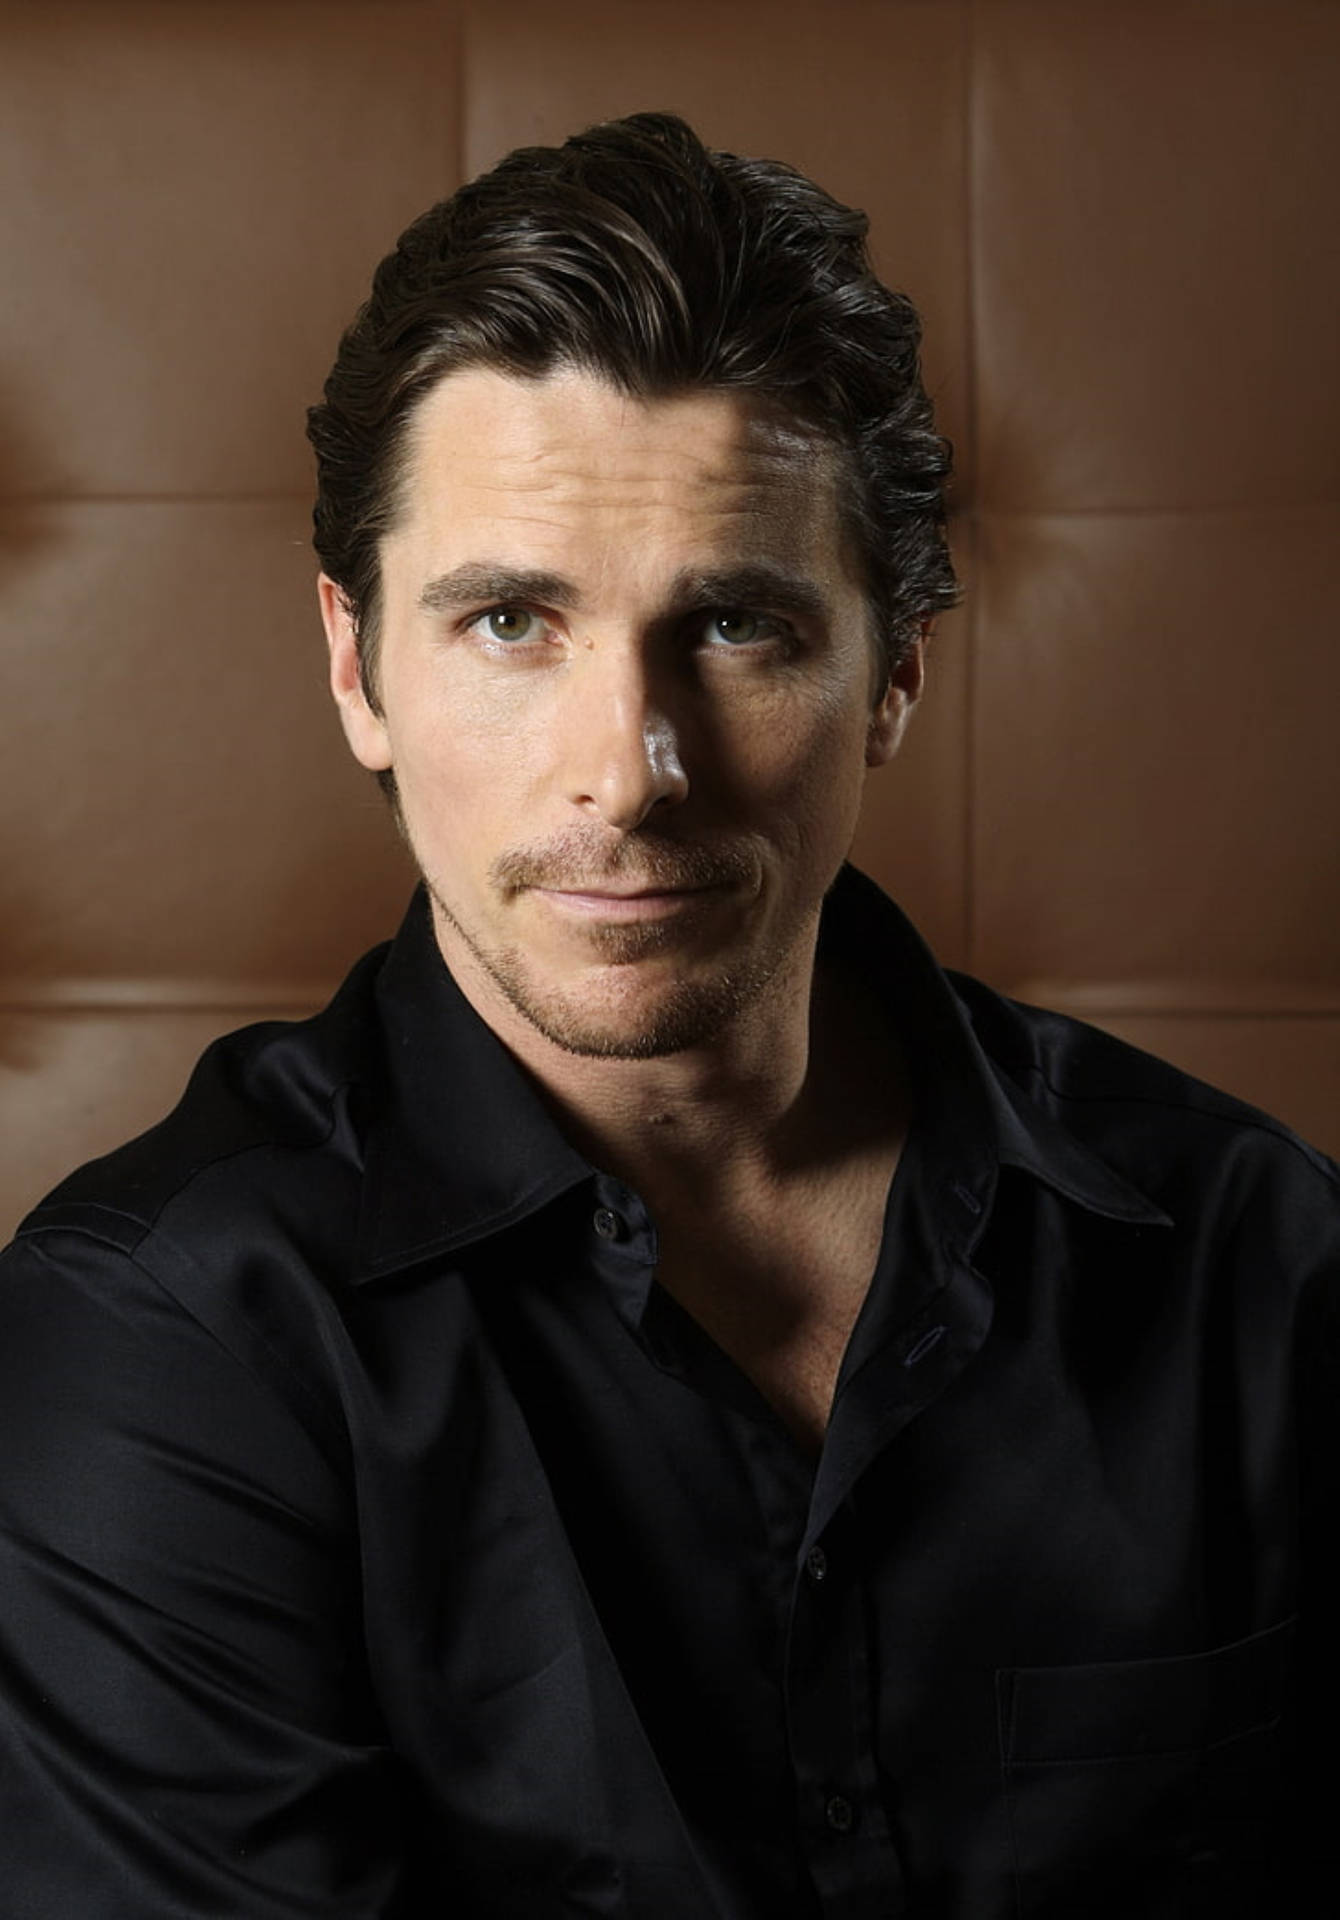 Hot British Actor Christian Bale Background